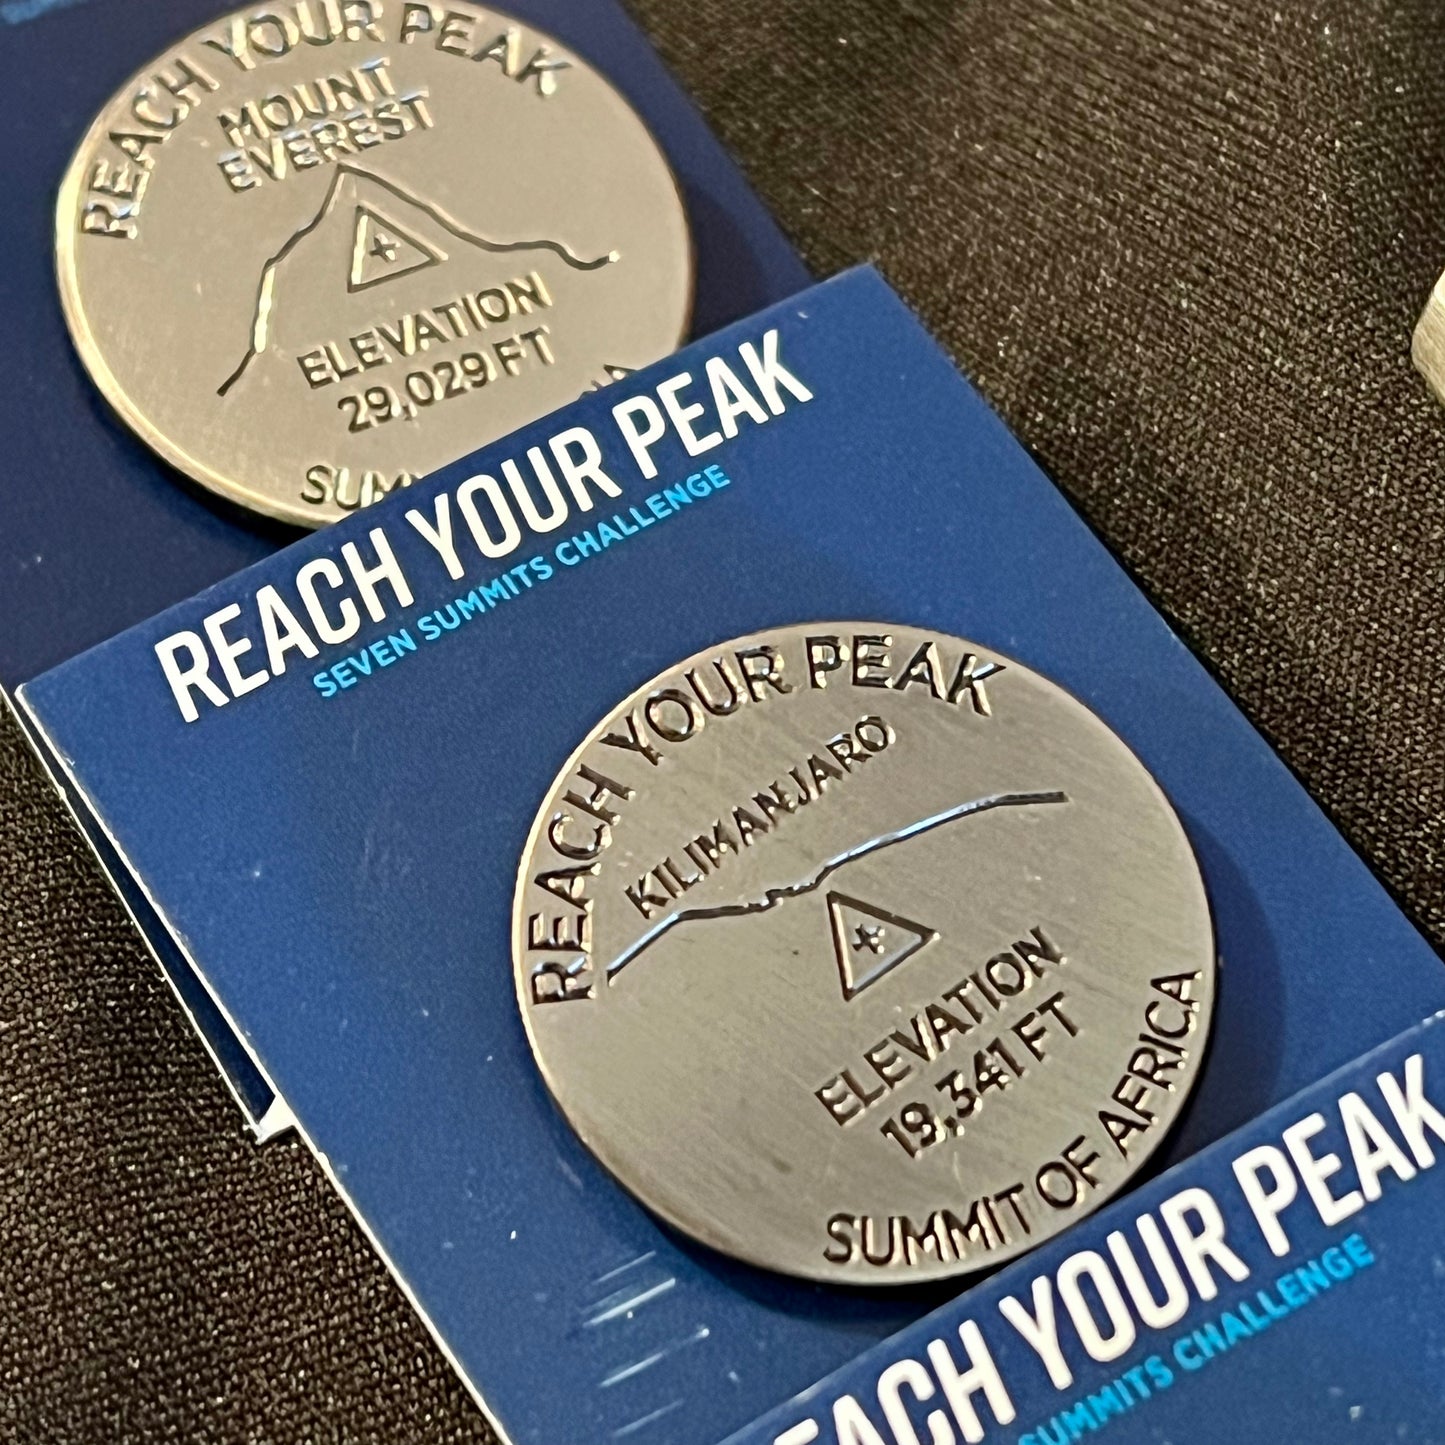 Reach Your Peak 7 Summits Challenge Medal & Pins Bundle